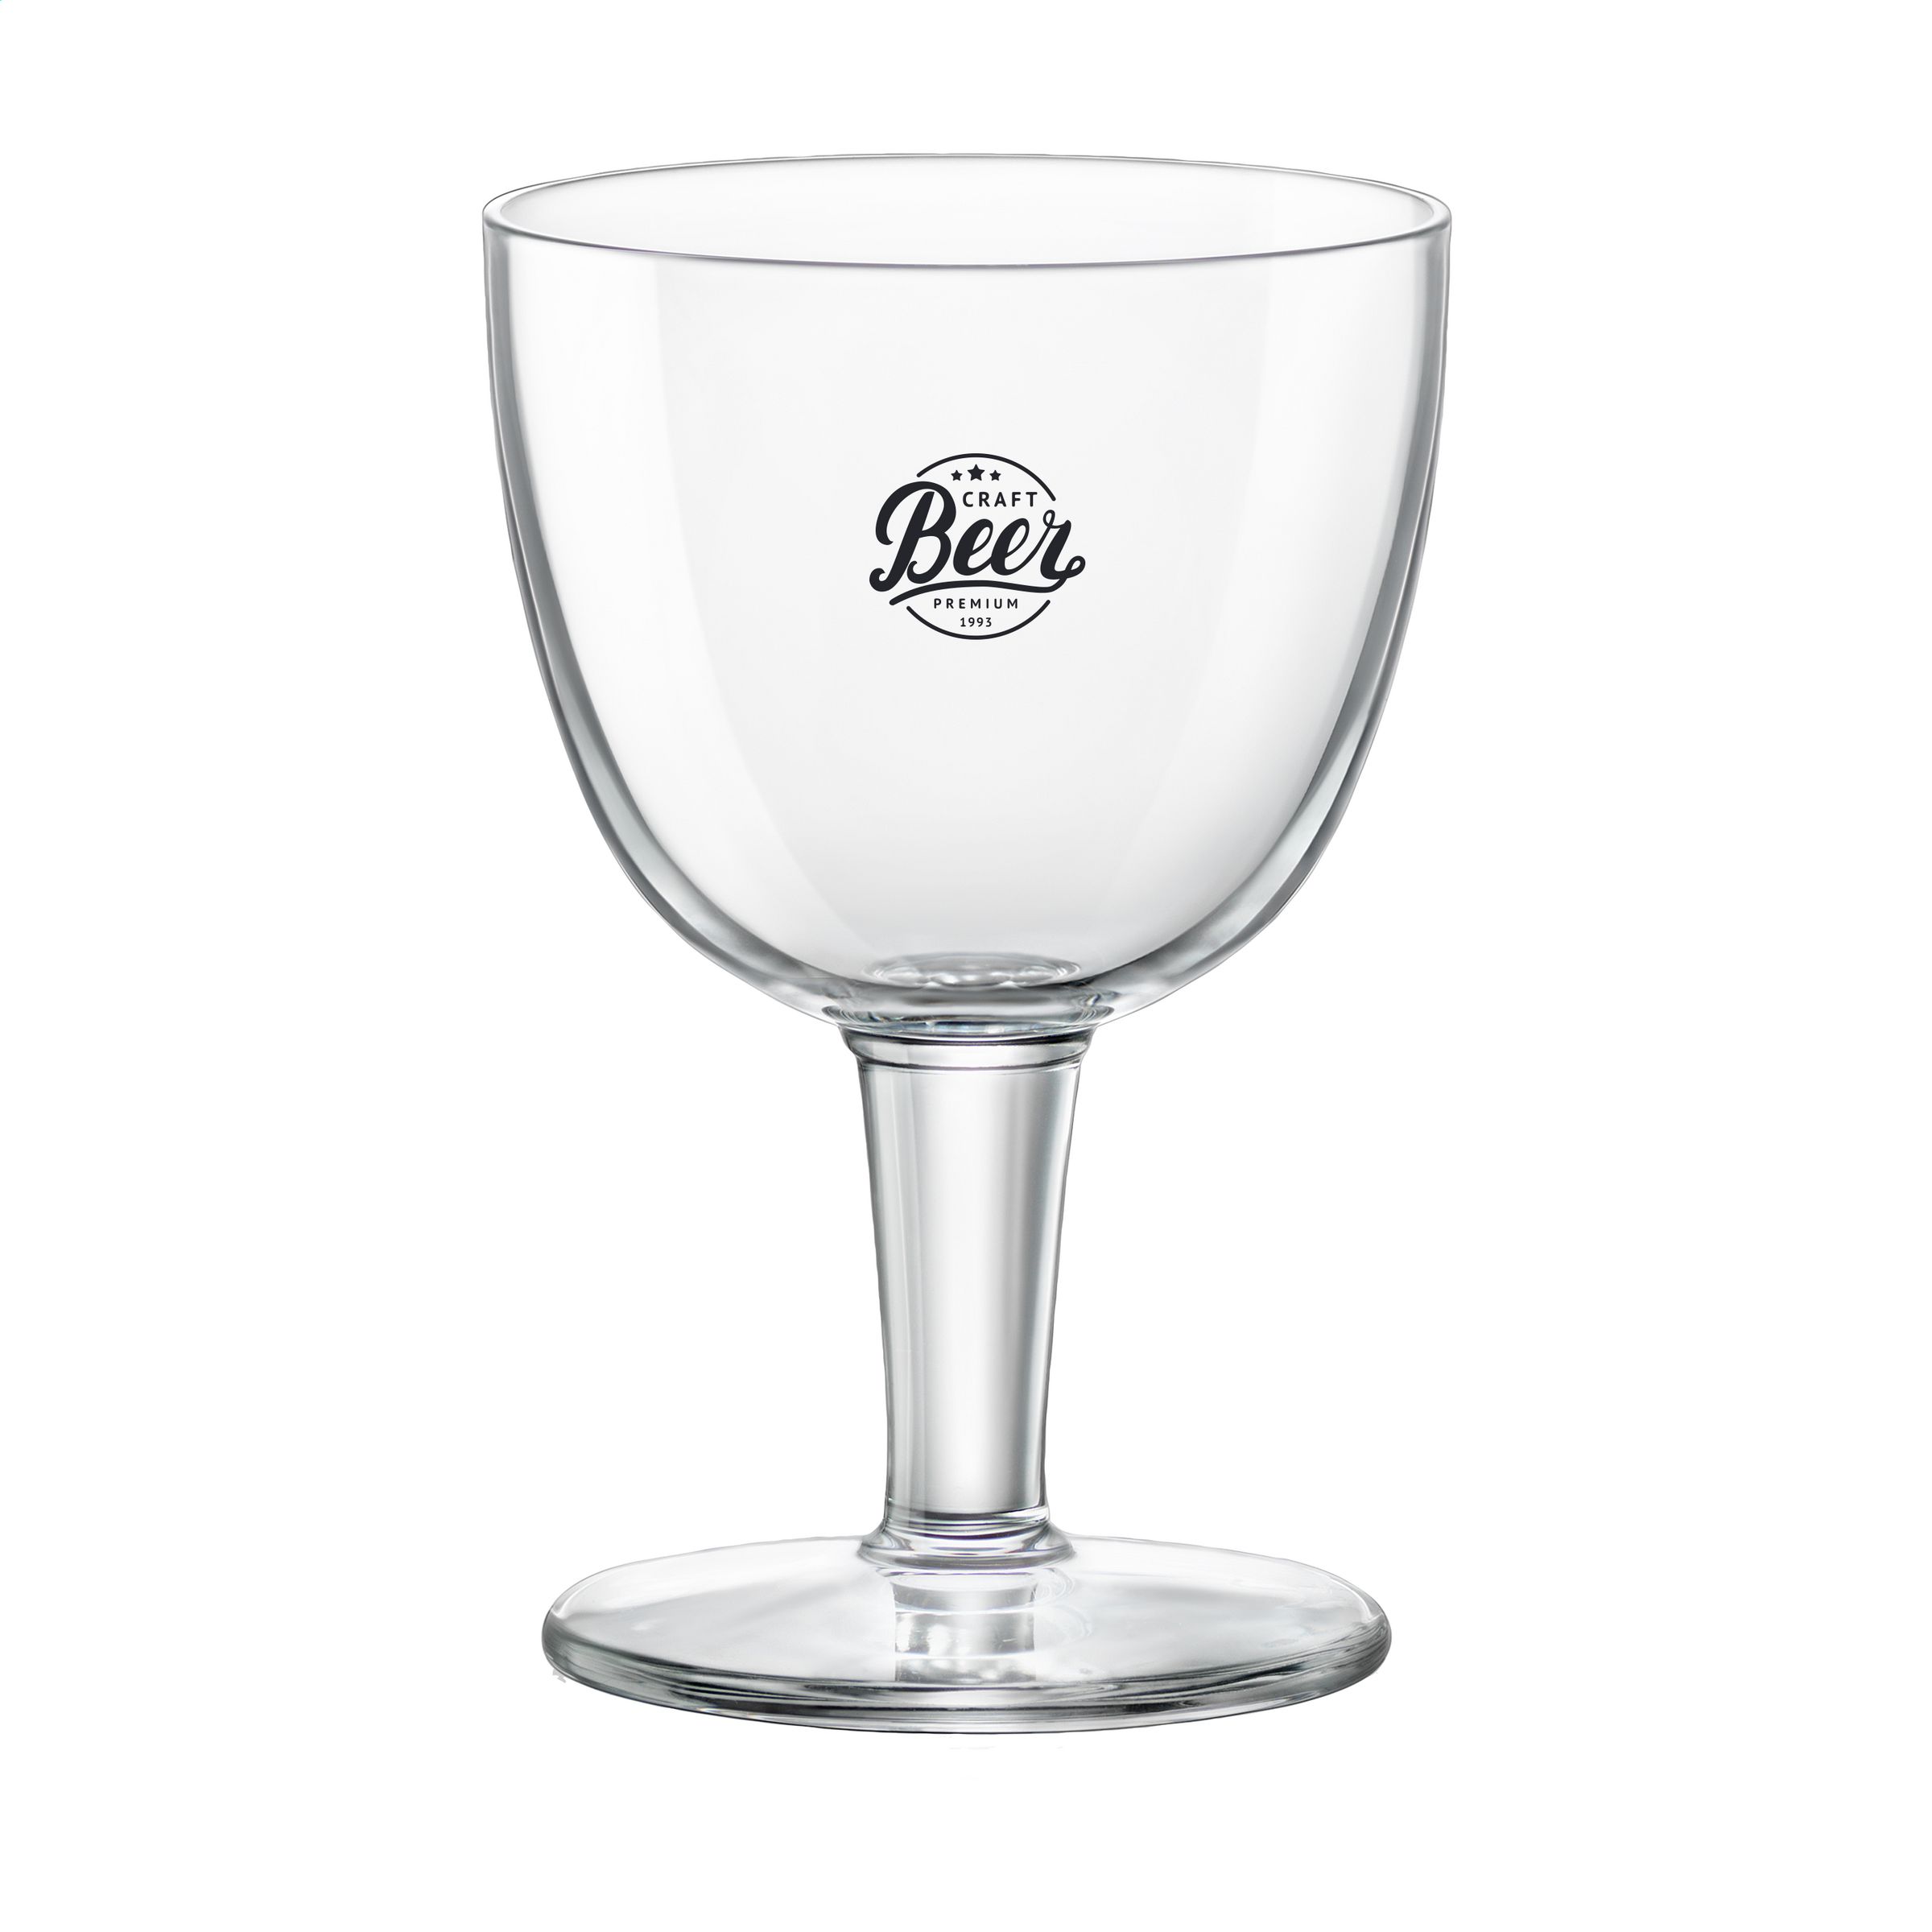 Abbey Trappist glass 450 ml